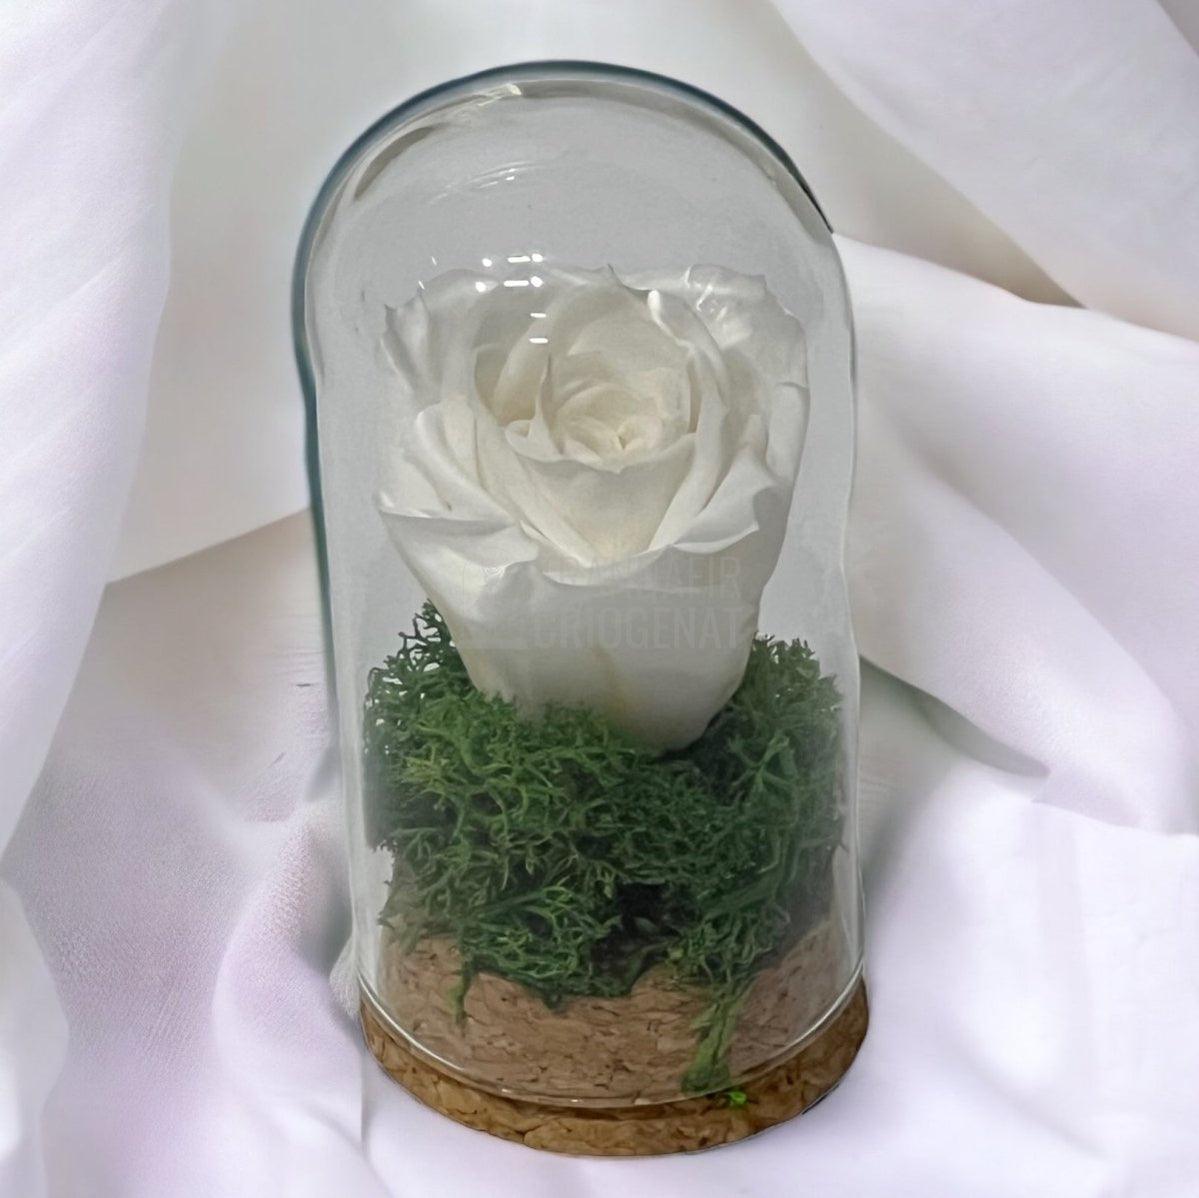 Trandafir Criogenat alb in cupola sticla 5x9,5cm (marturie) - Trandafir-Criogenat.ro